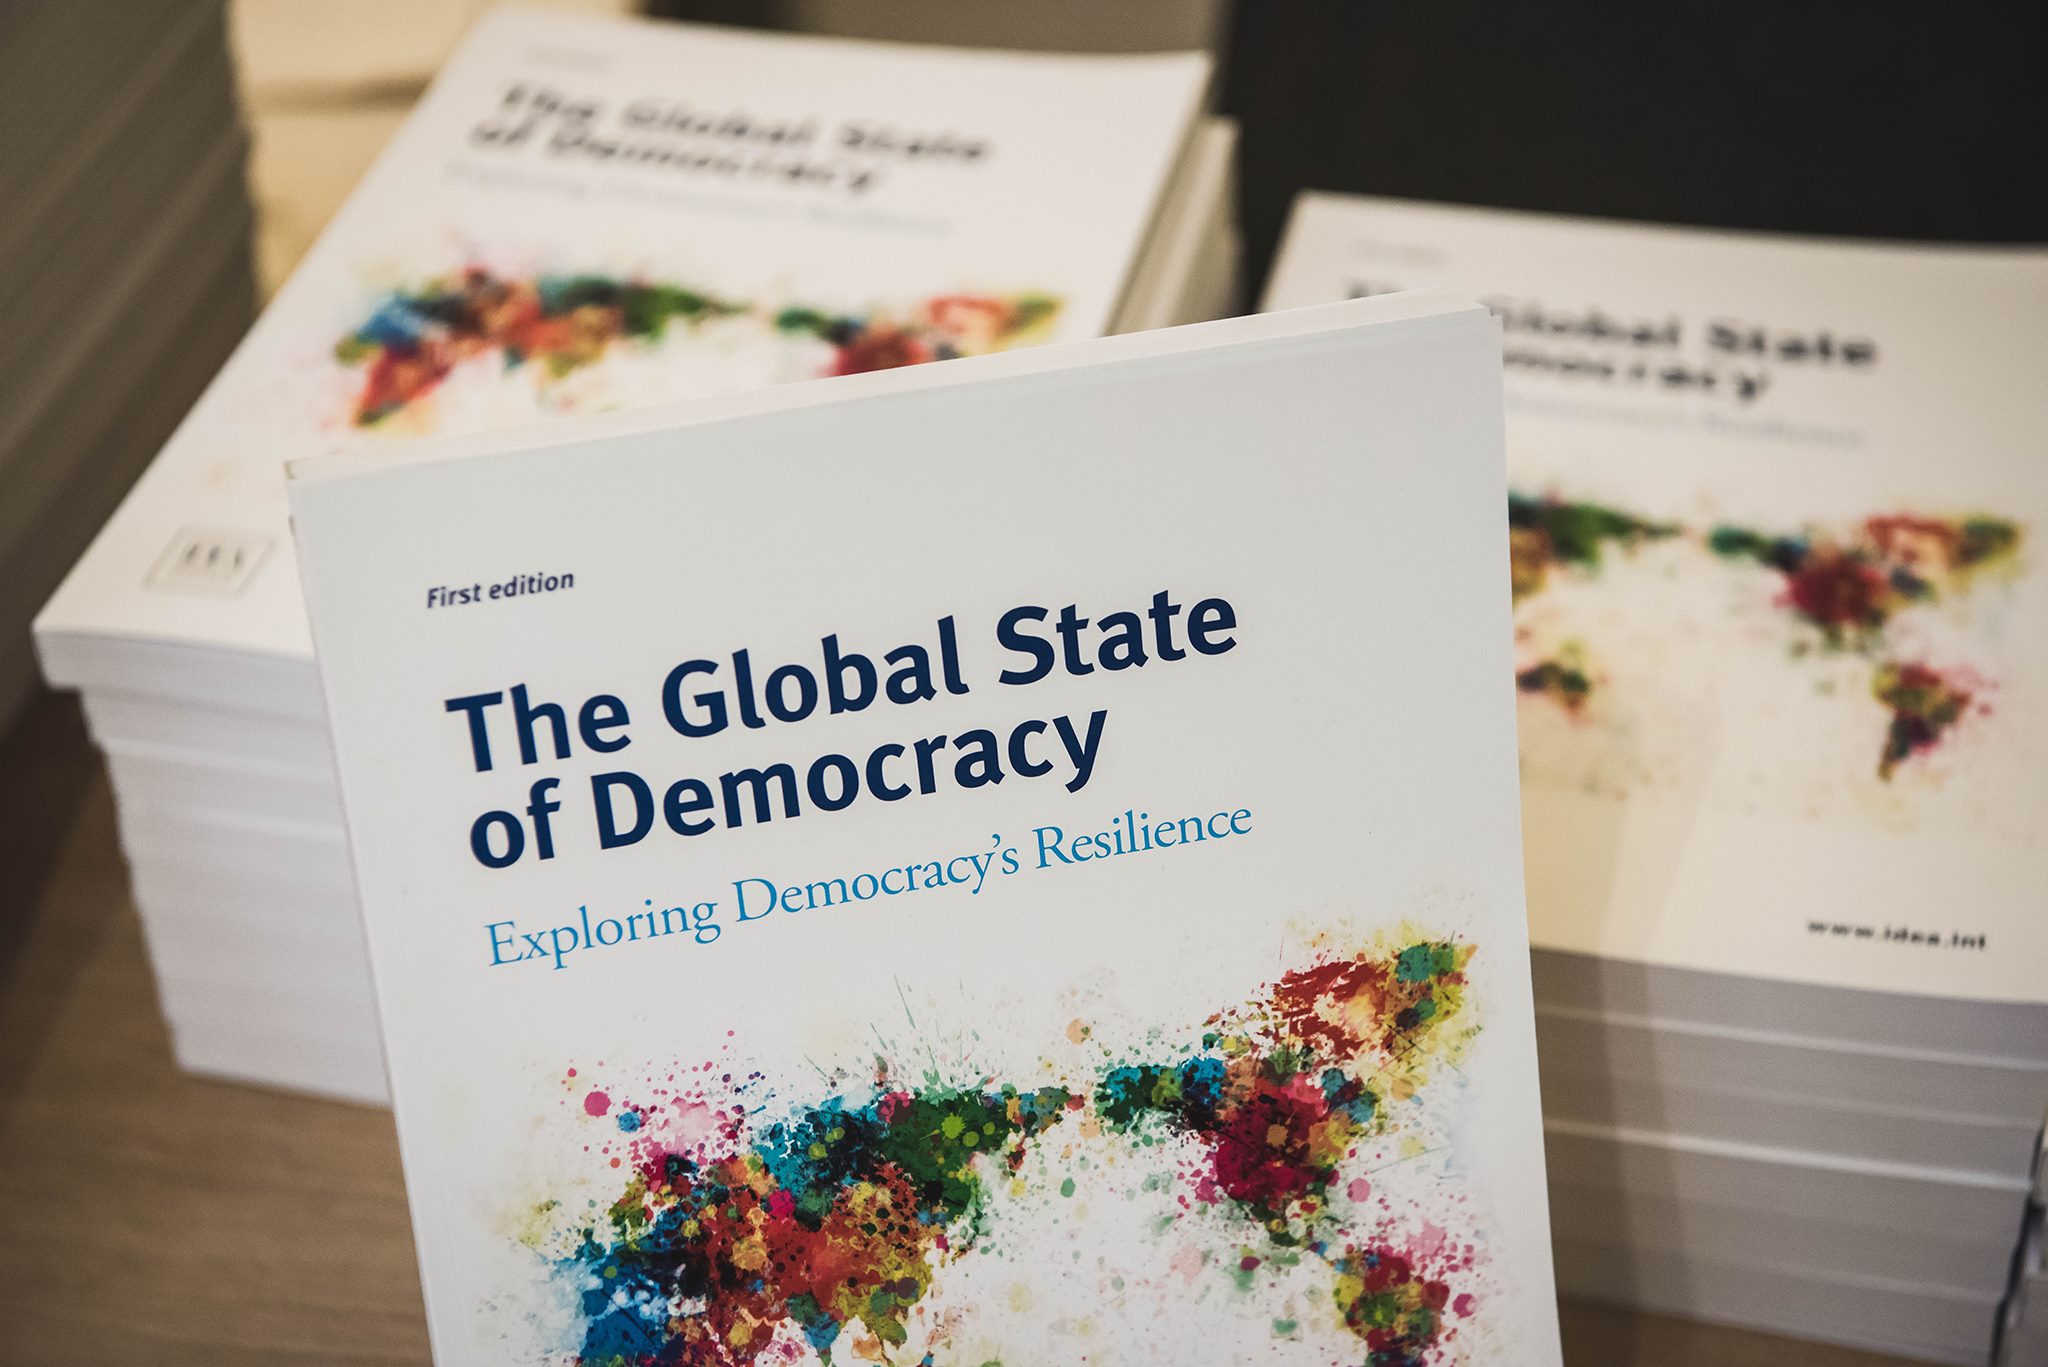 The Global State of Democracy publication. Image: International IDEA / Stuudio Huusmann